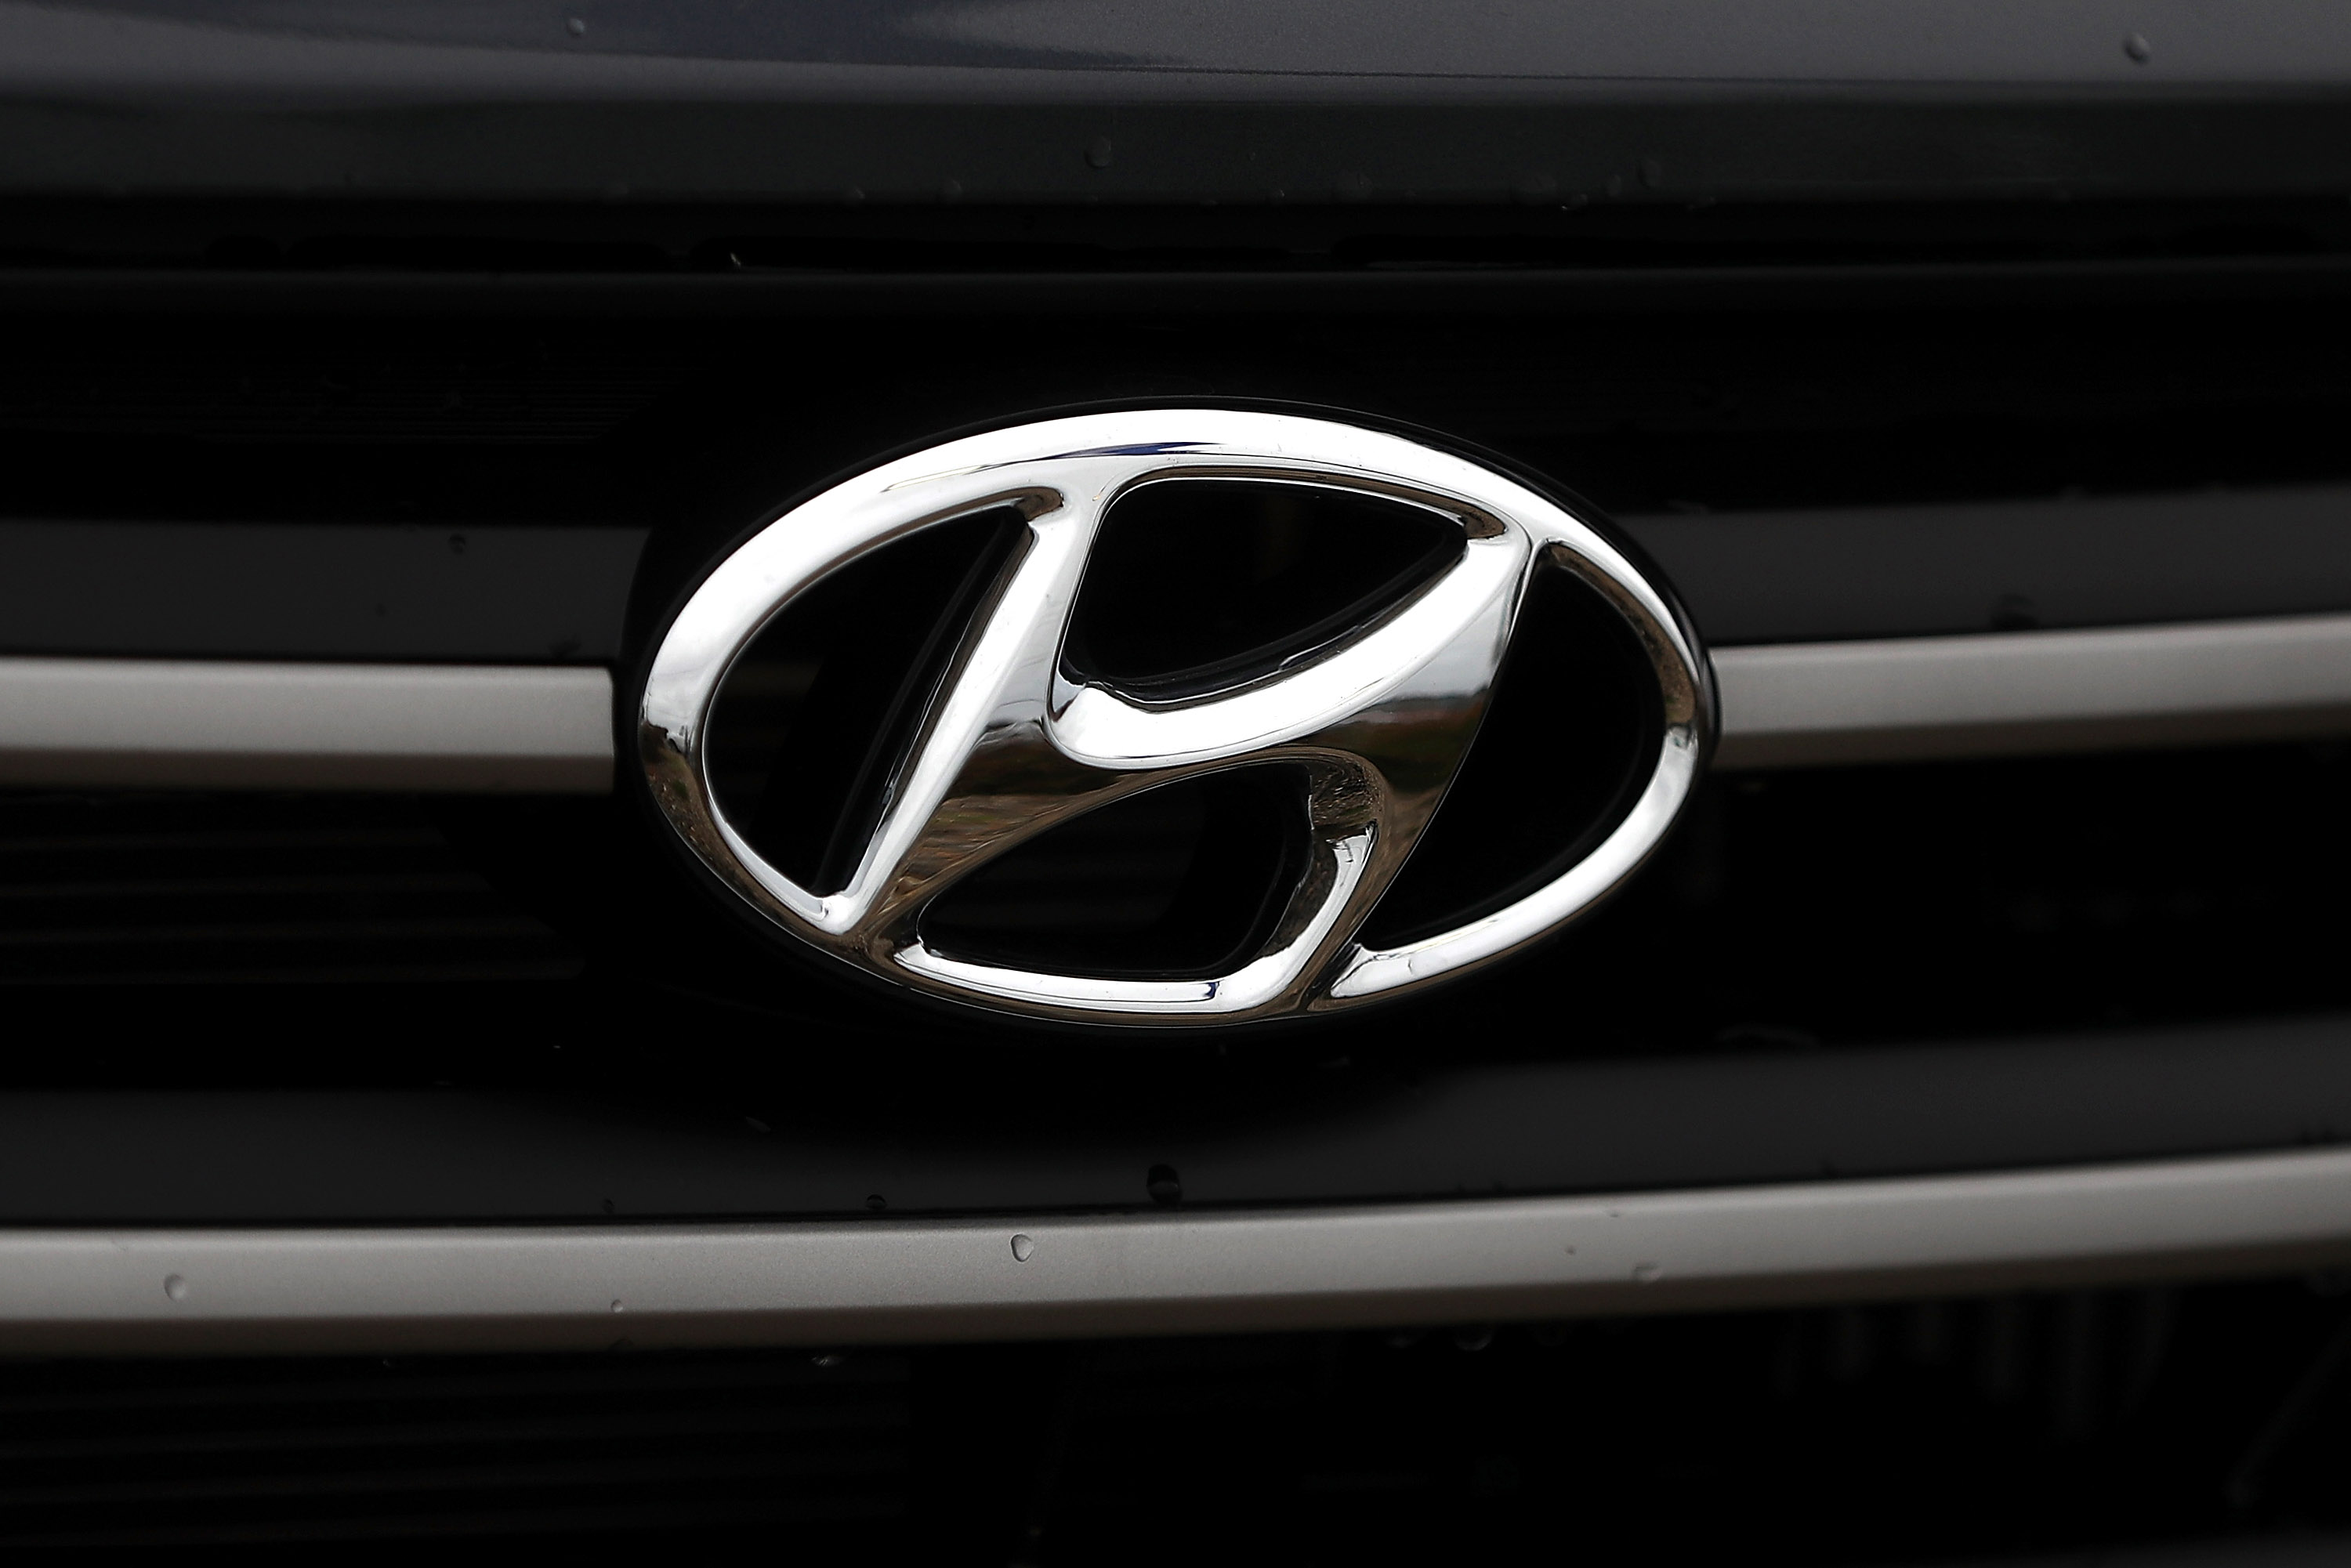 The Hyundai logo is displayed on a brand new Hyundai Santa Fe SUV at a Hyundai dealership on April 7, 2017 in Colma, California. (Justin Sullivan/Getty Images)